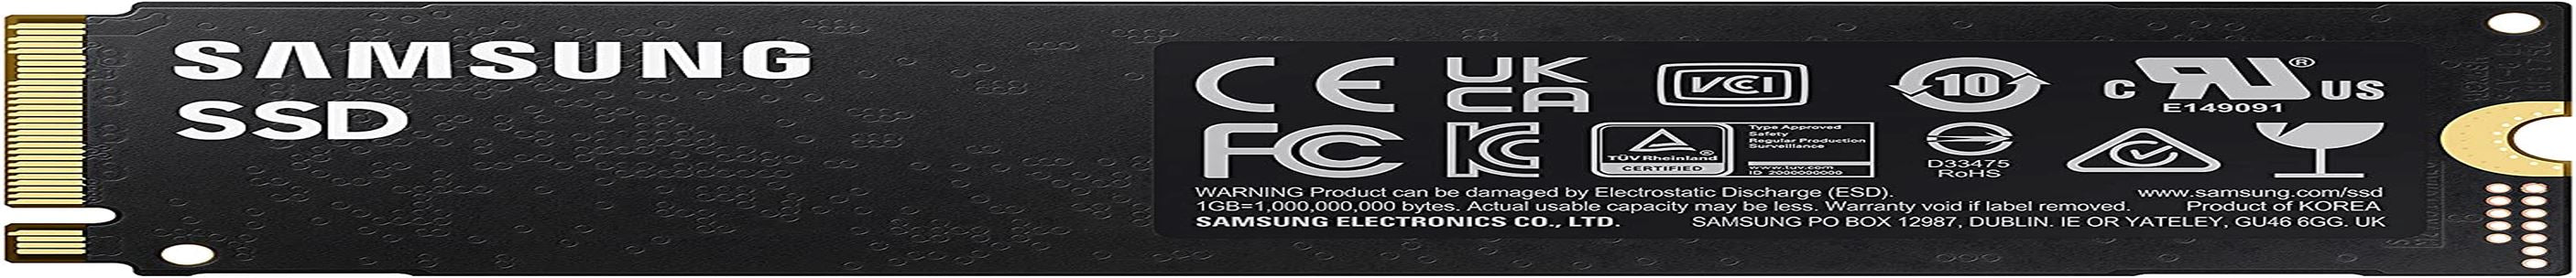 Samsung 970 EVO plus 500 GB Pcie Nvme M.2 (2280) Internal Solid State Drive (SSD) (MZ-V7S500), Black